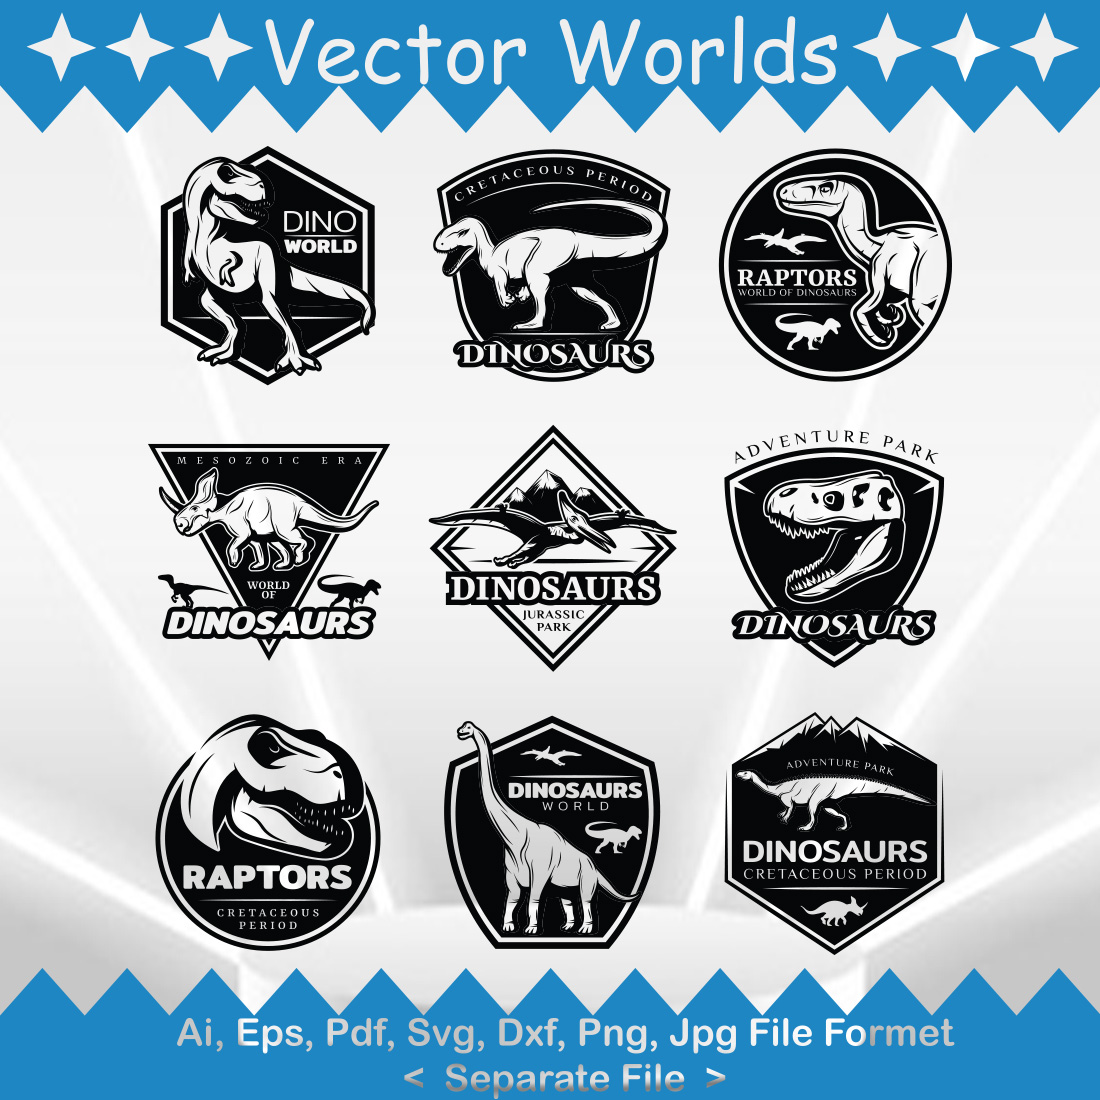 Dinosaurs Logos SVG Vector Design cover image.